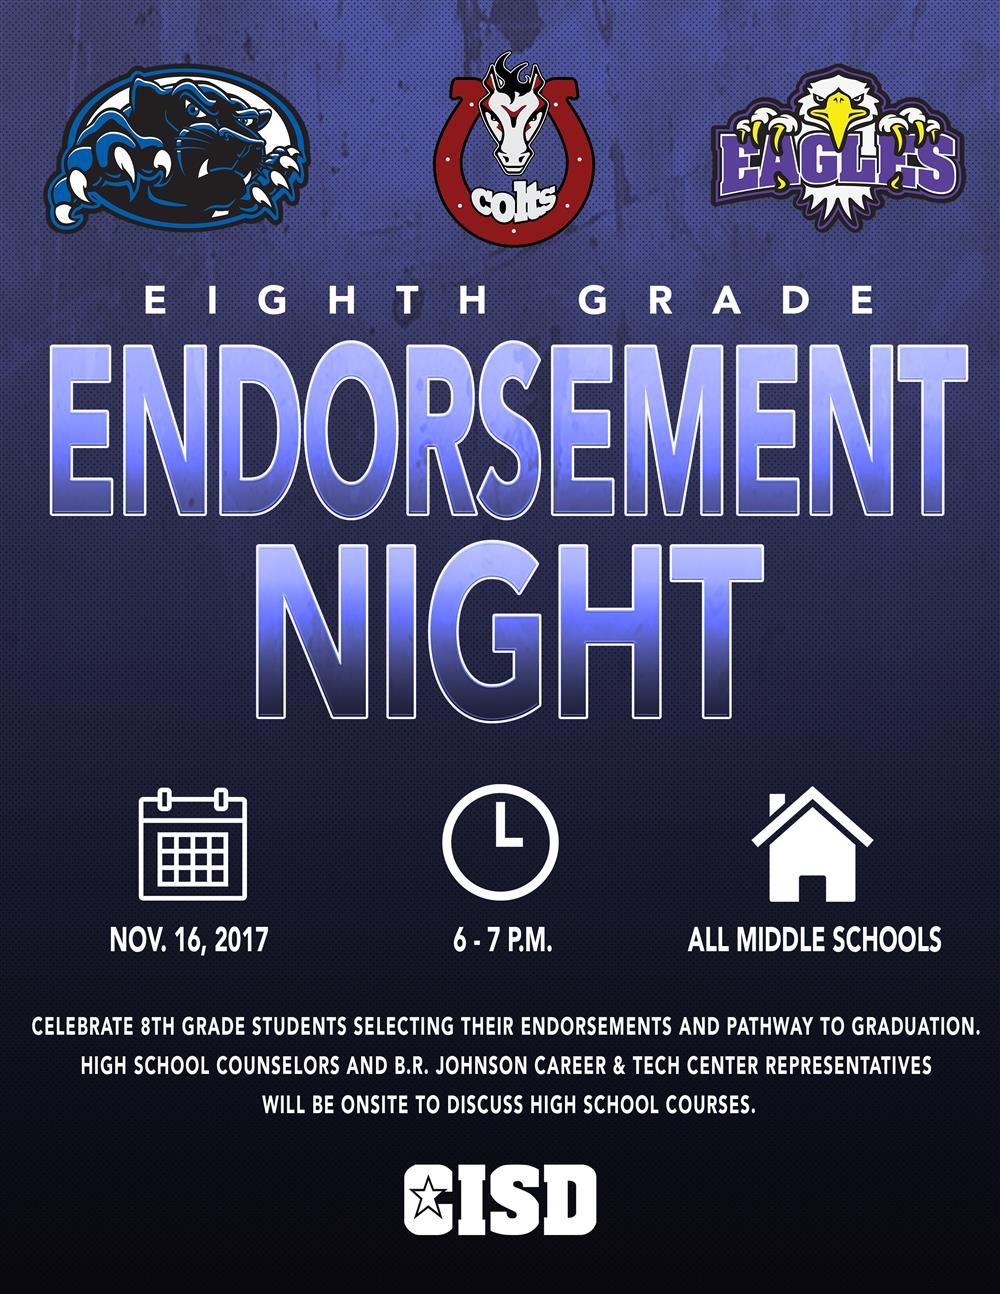 8th Grade Endorsement Night. Nov. 16, 6-7 p.m. All Middle Schools 